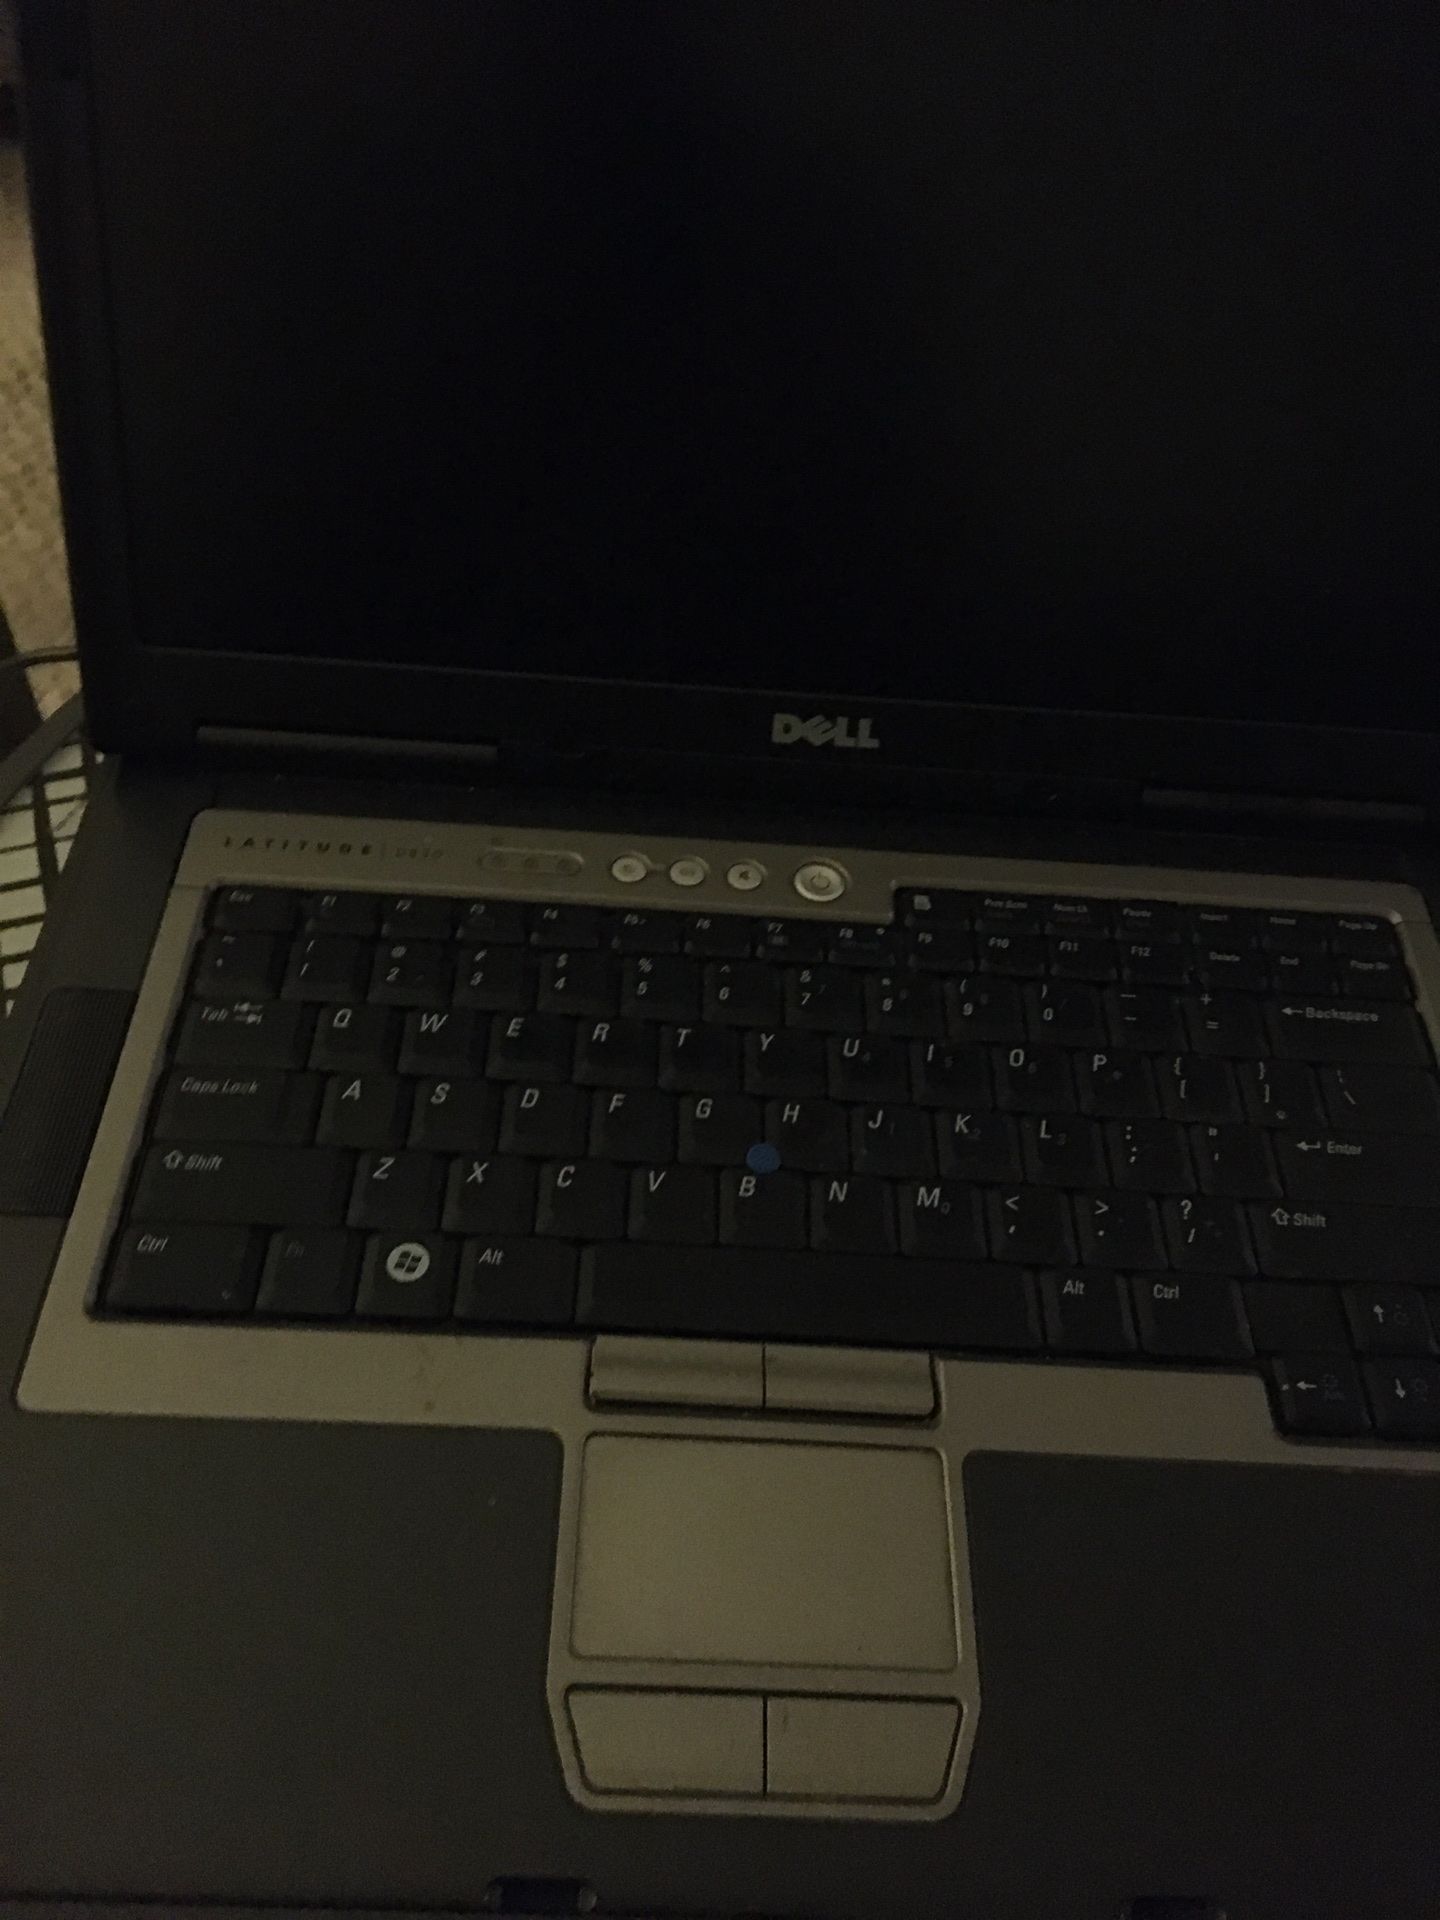 Dell latitude D830 laptop